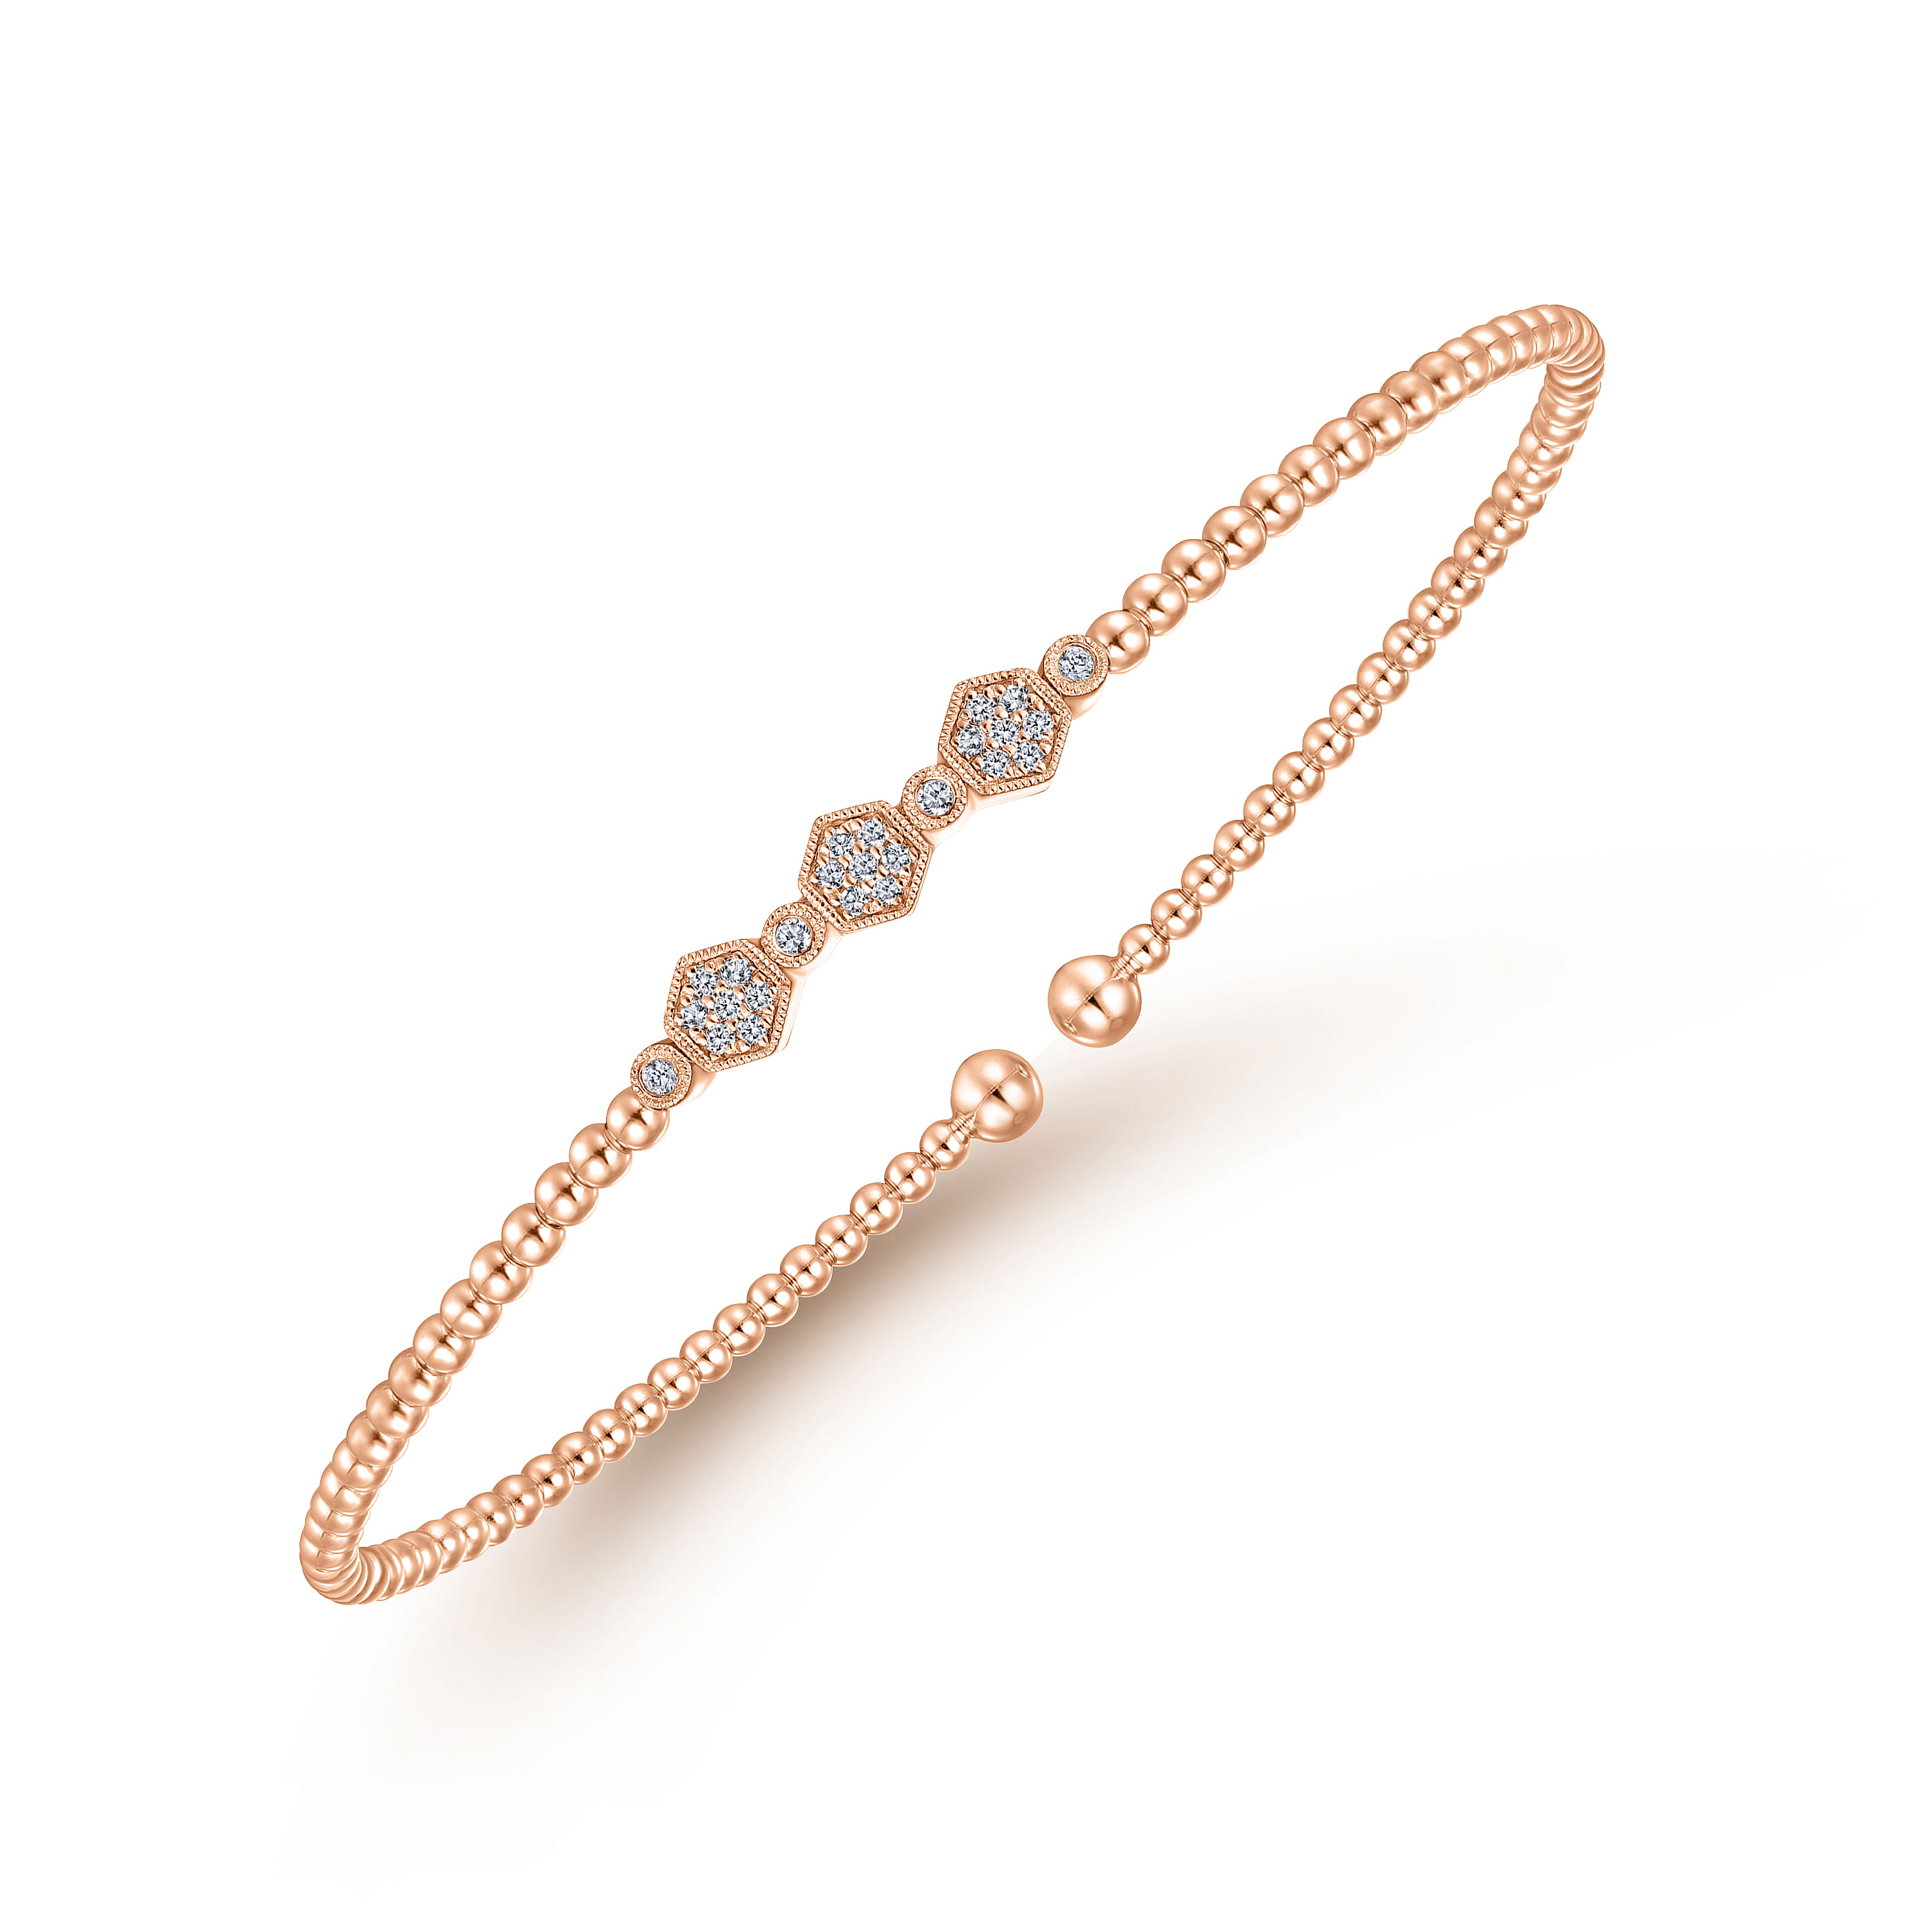 14K Rose Gold Bujukan Bead Cuff Bracelet with Cluster Diamond Hexagon Stations